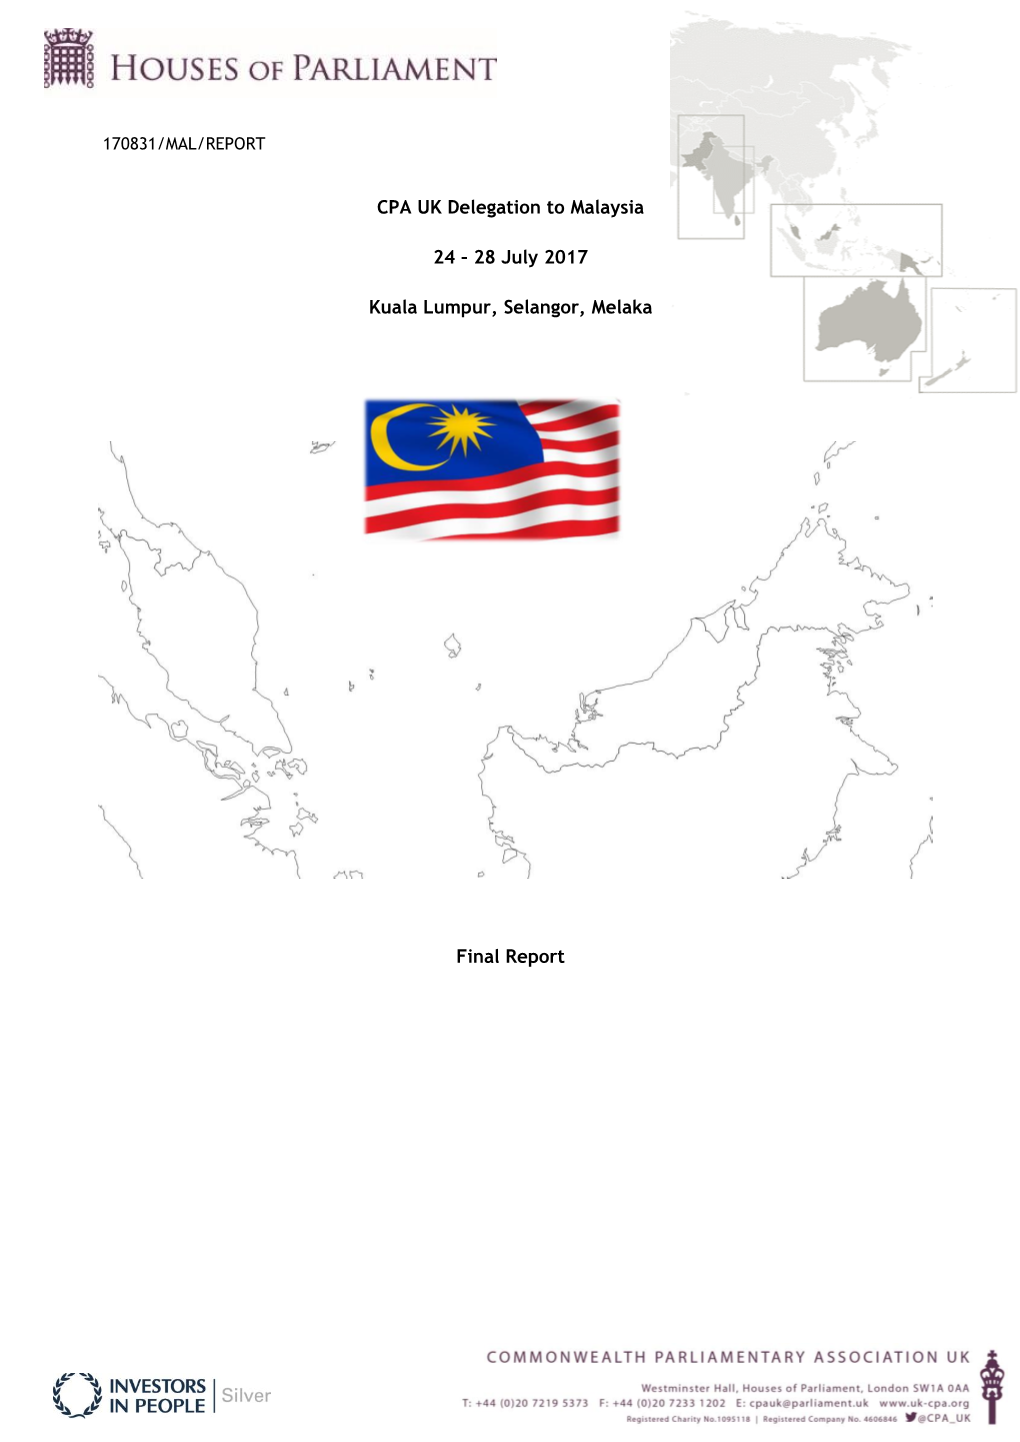 CPA UK Delegation to Malaysia, Kuala Lumpur, Selangor, Melaka, 24